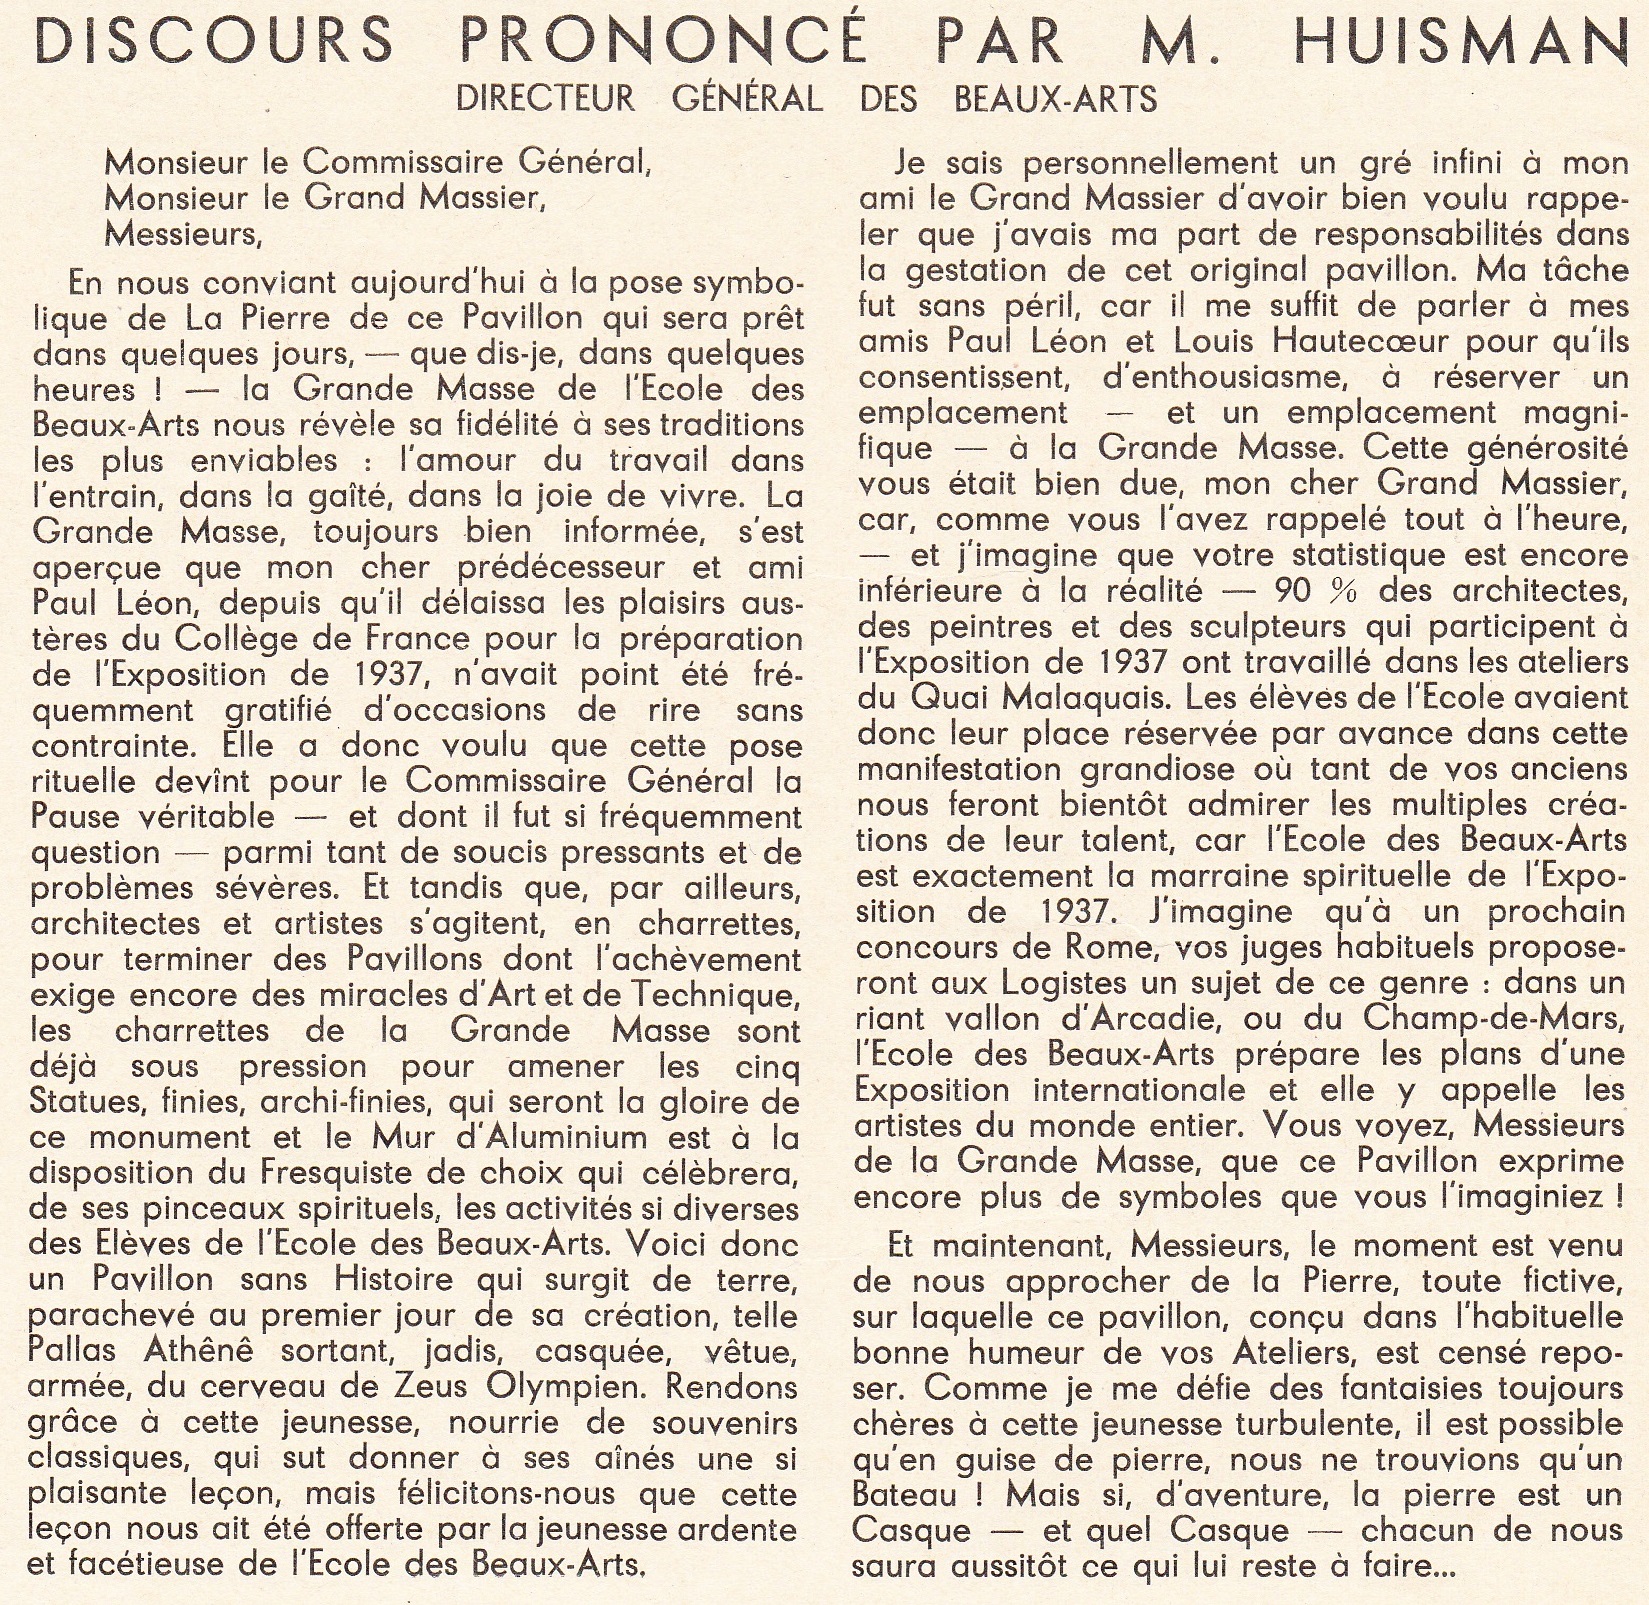 BULLETIN_193705_Discours-HUISMAN-premiere-pierre.jpg